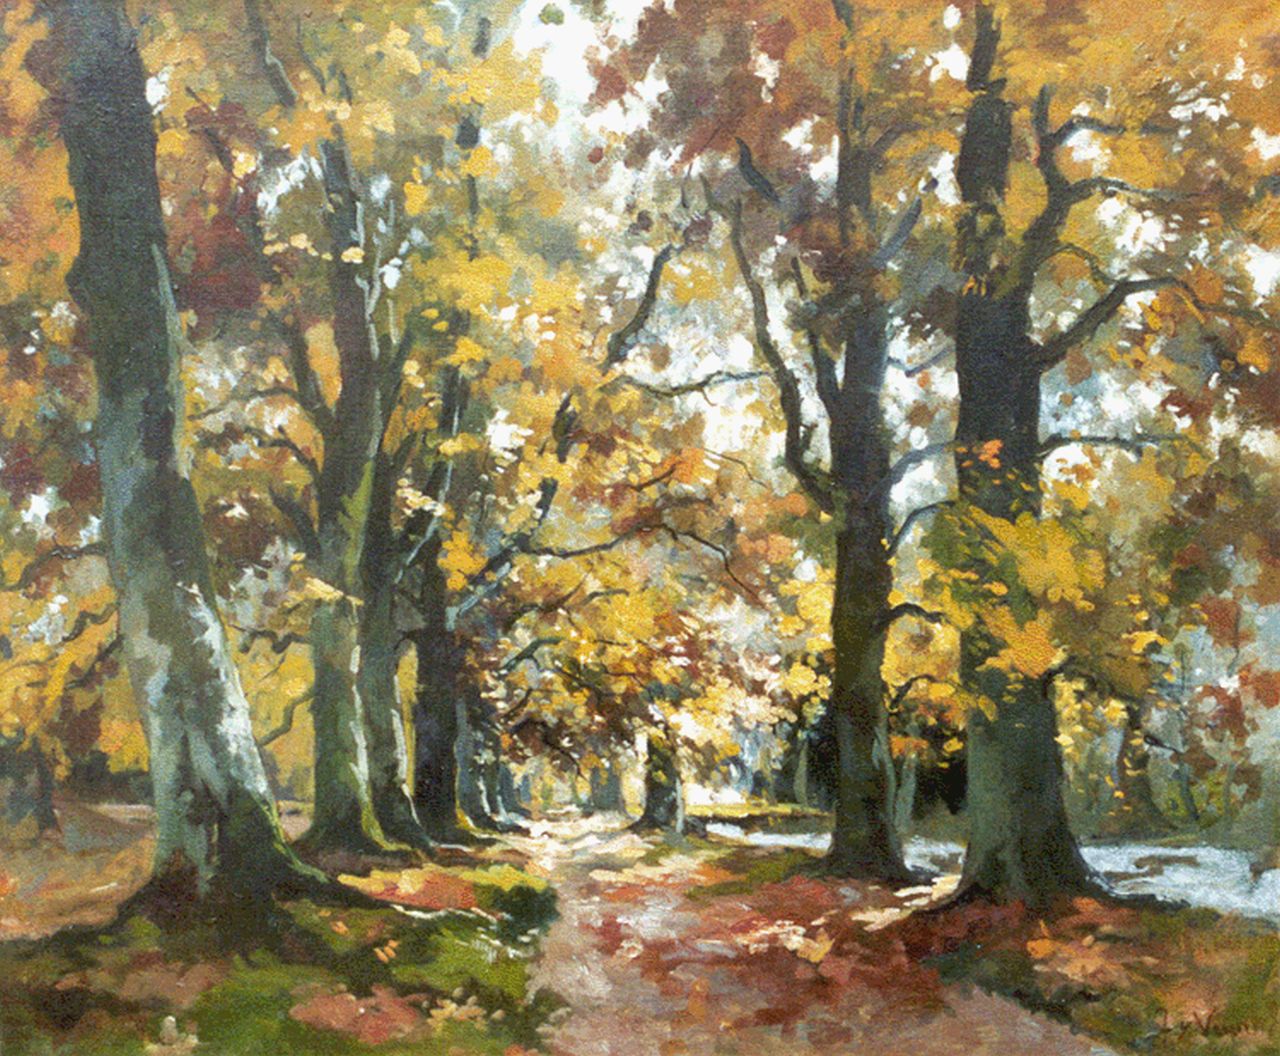 Vuuren J. van | Jan van Vuuren, Fall woods, Öl auf Leinwand 50,2 x 60,4 cm, signed l.r.